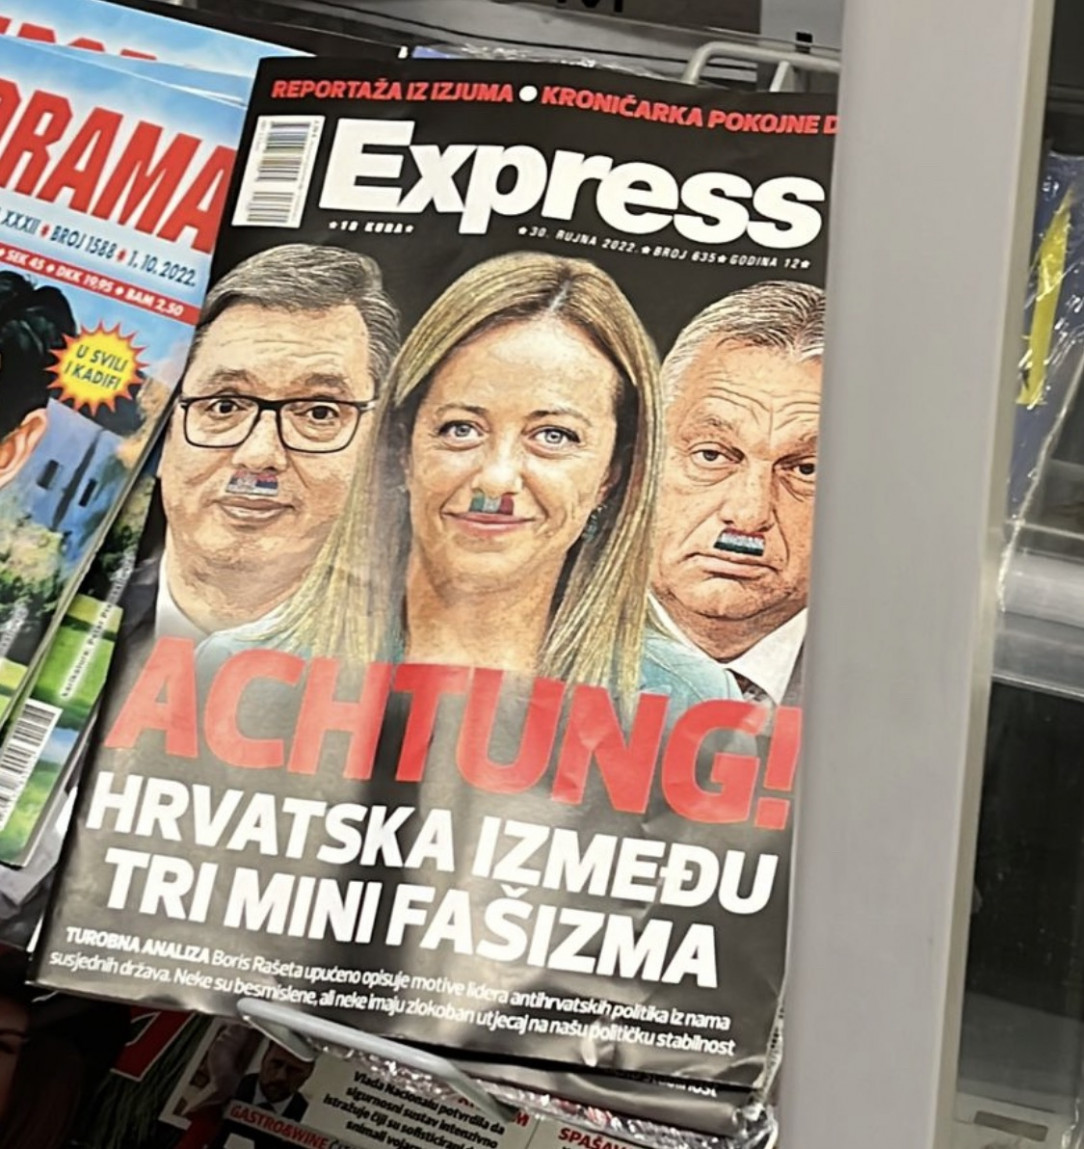 Croatian newspaper today: “Achtung! Croatia is now in between three mini fascists. “